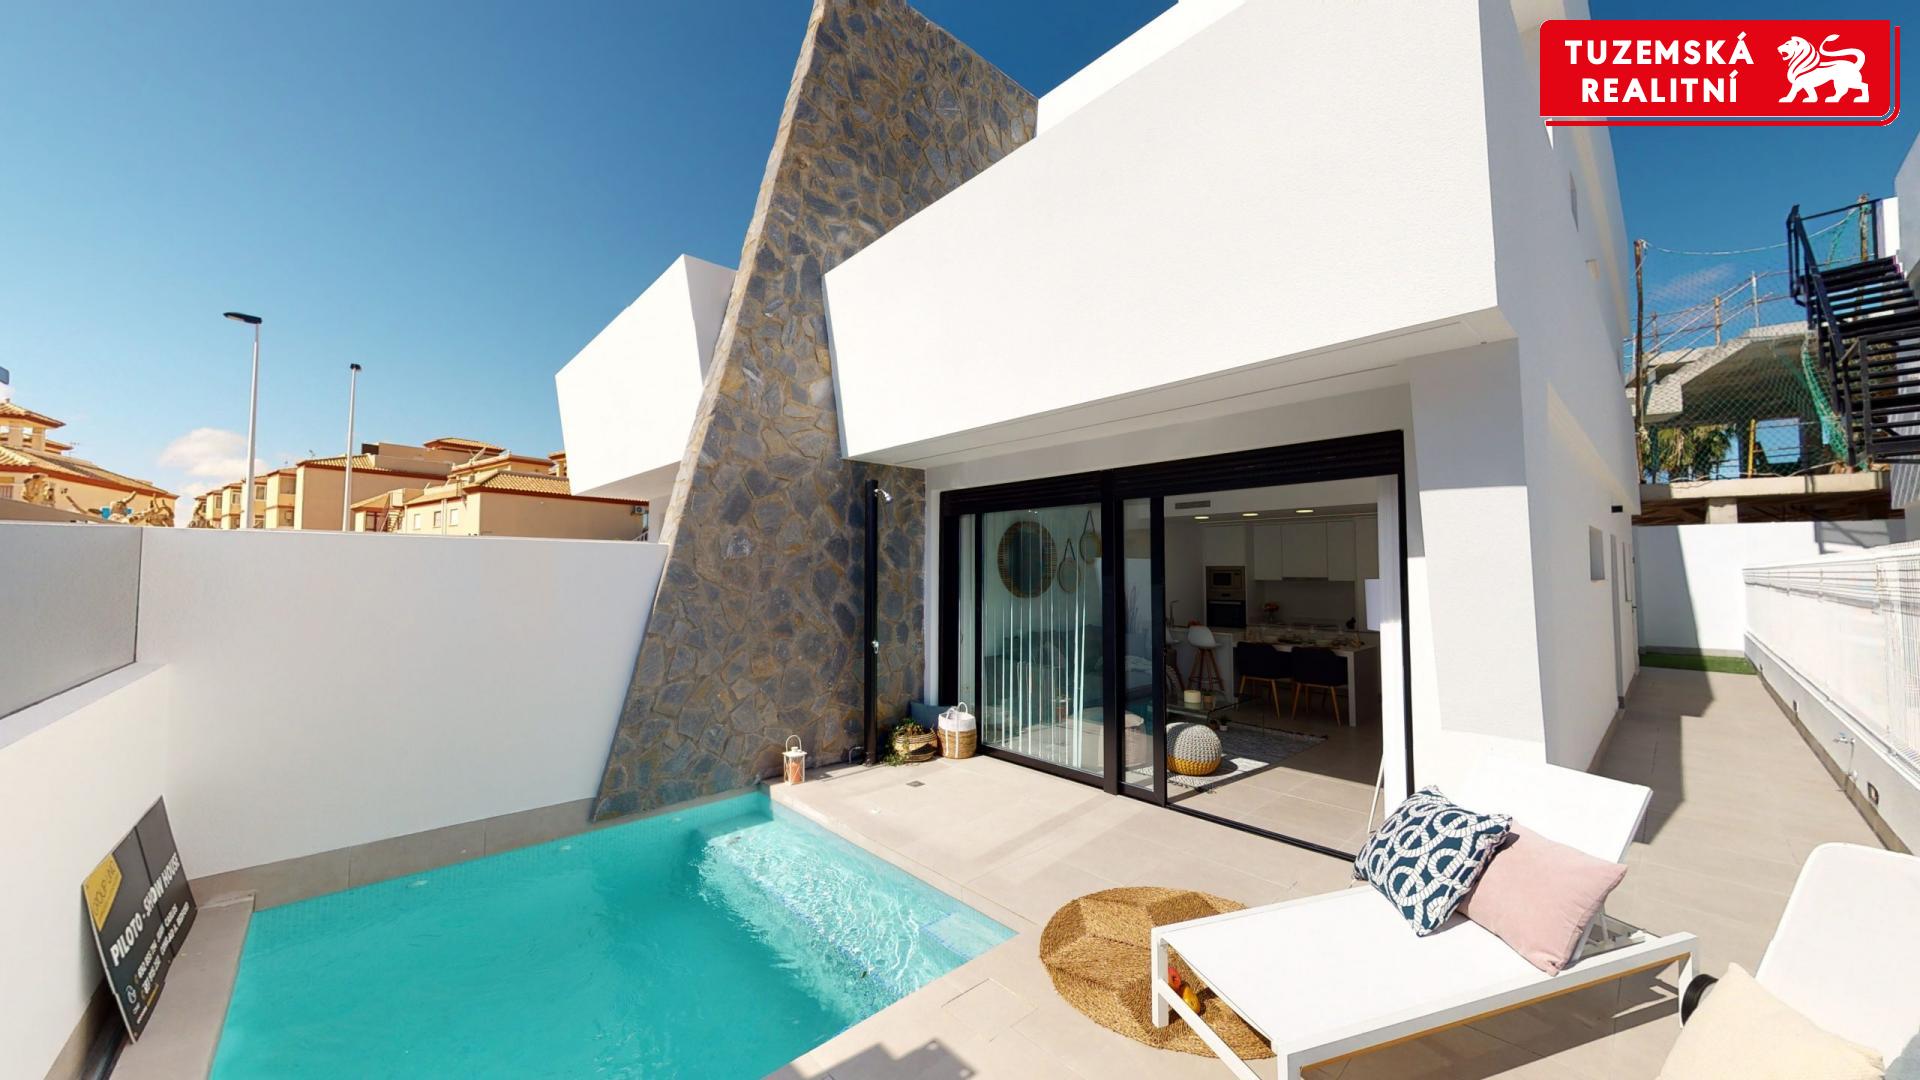 Splňte si své sny o rekreační nemovitosti na slunné Costa Blance, 4+1., obrázek č. 2